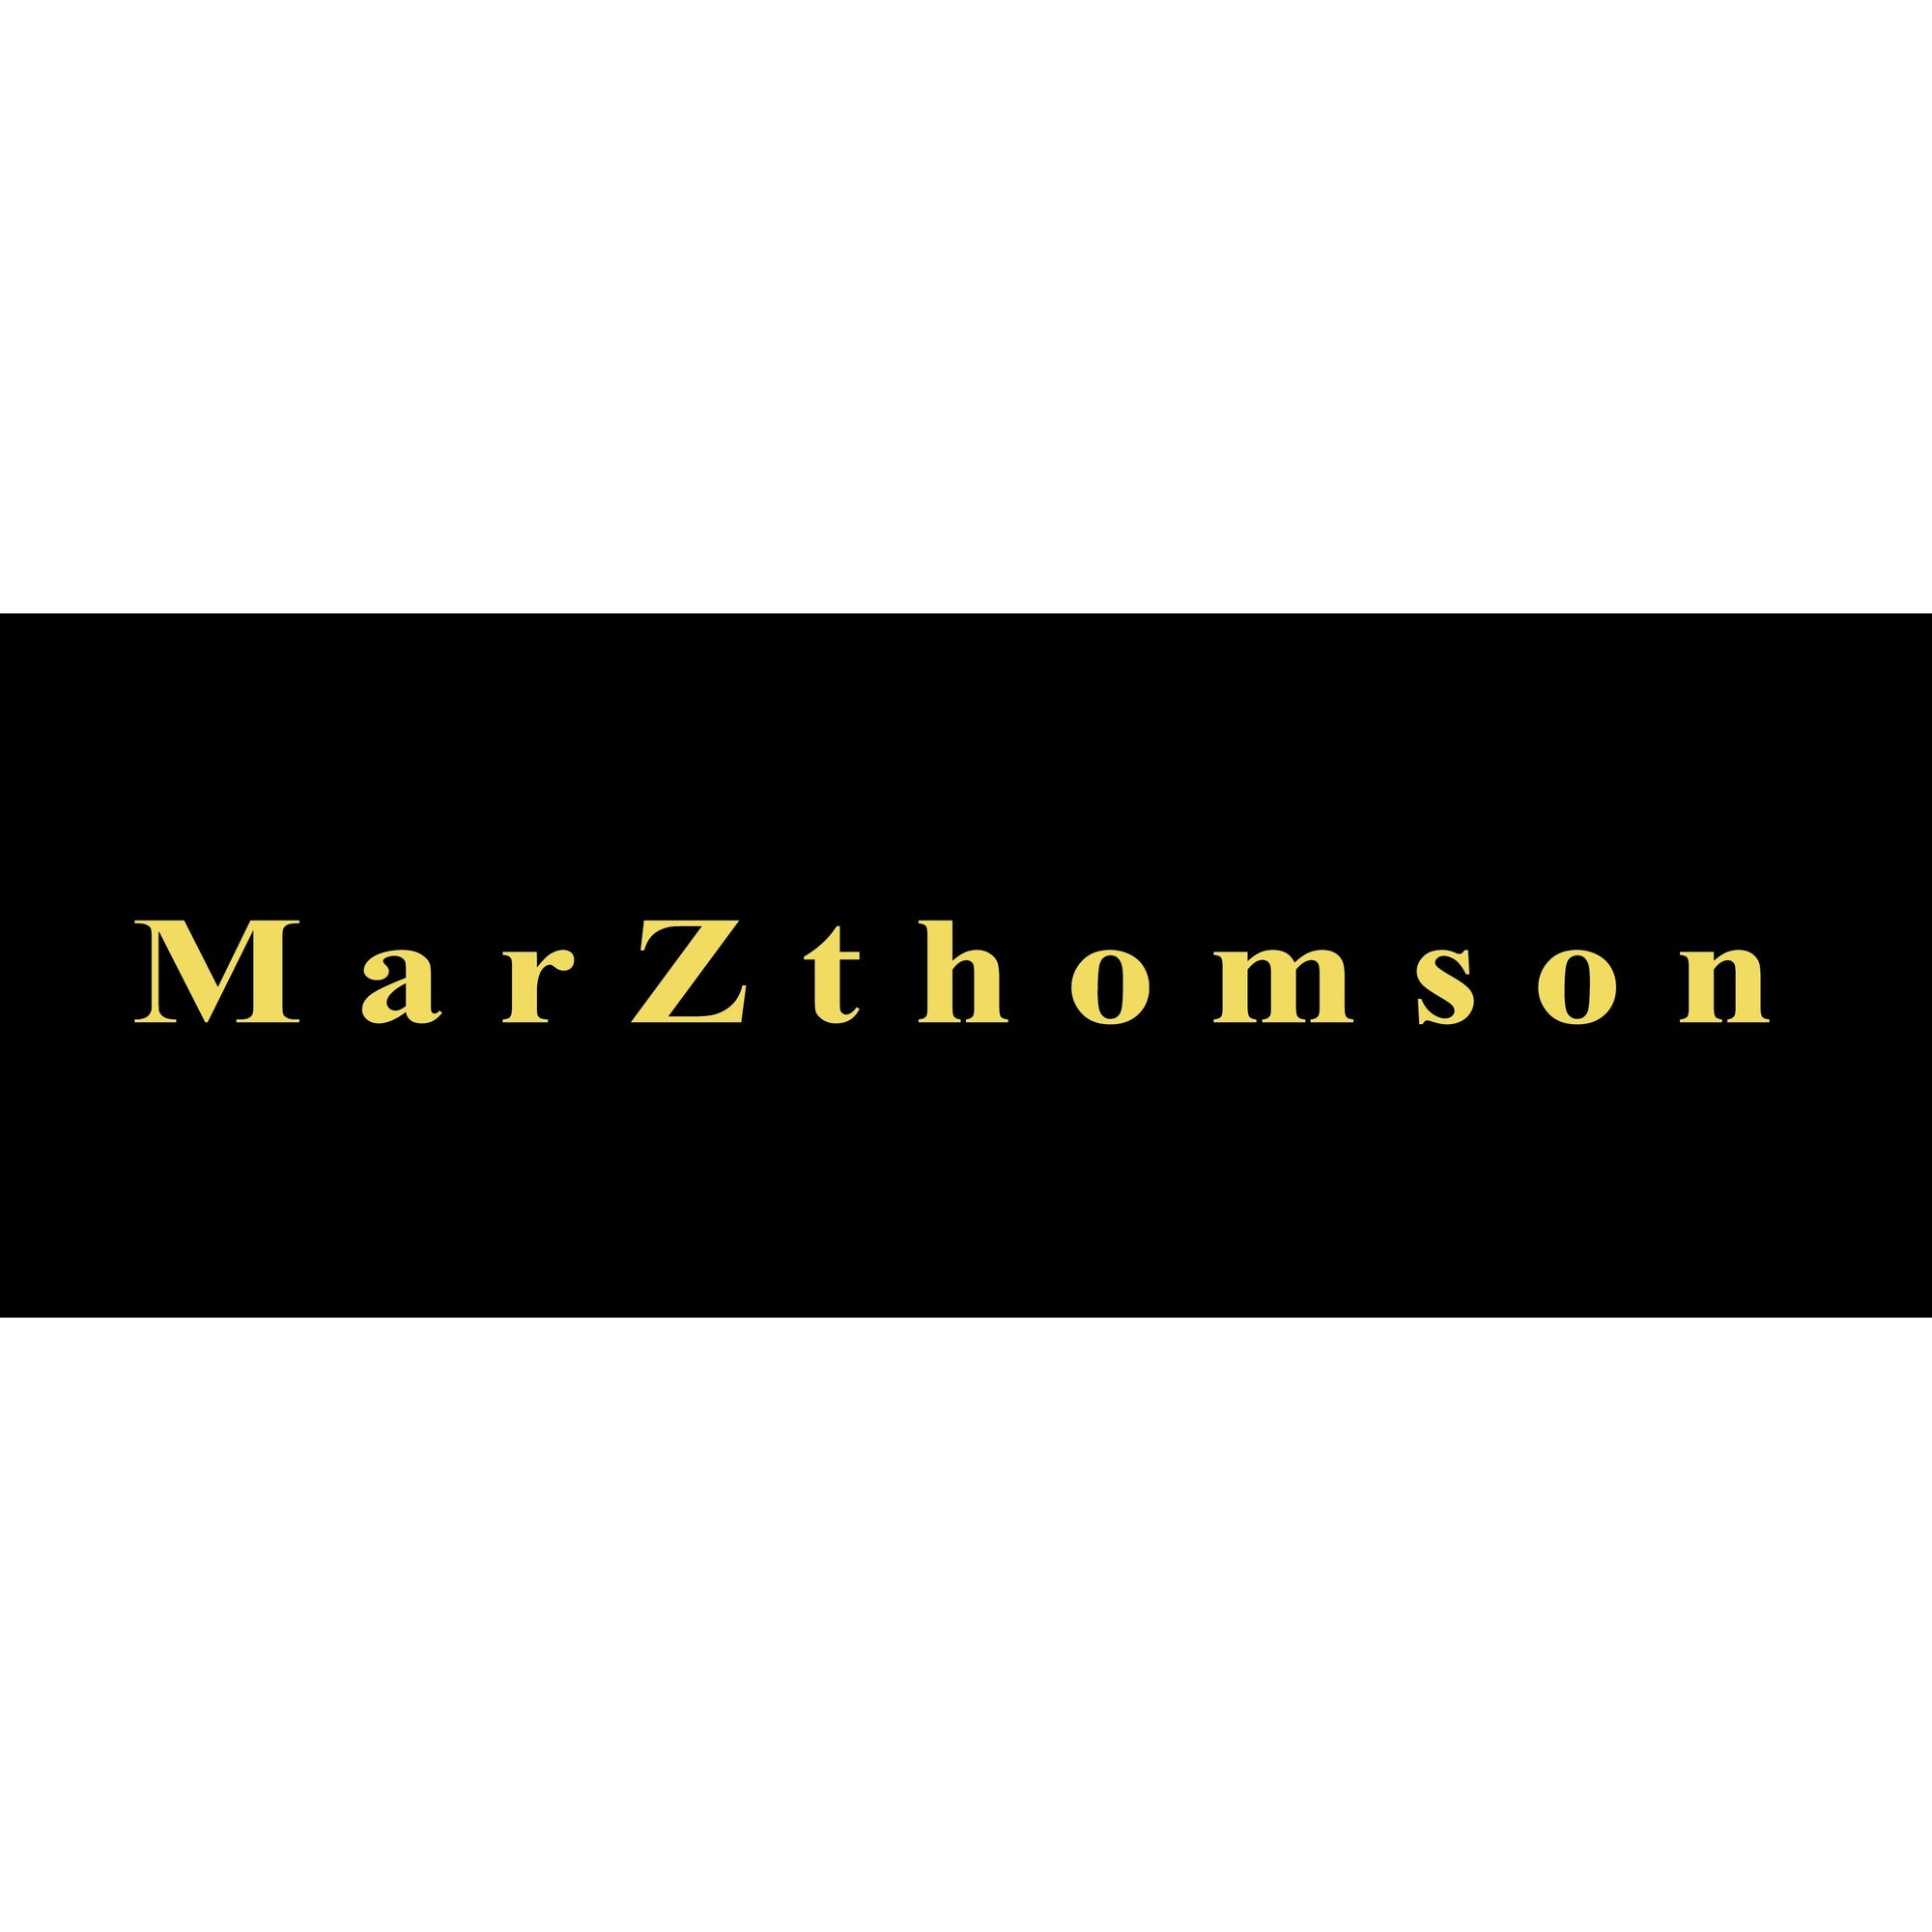 MarZthomson Lobster Cufflinks Silver-Animal and Nature Cufflinks-MarZthomson-Cufflinks.com.sg